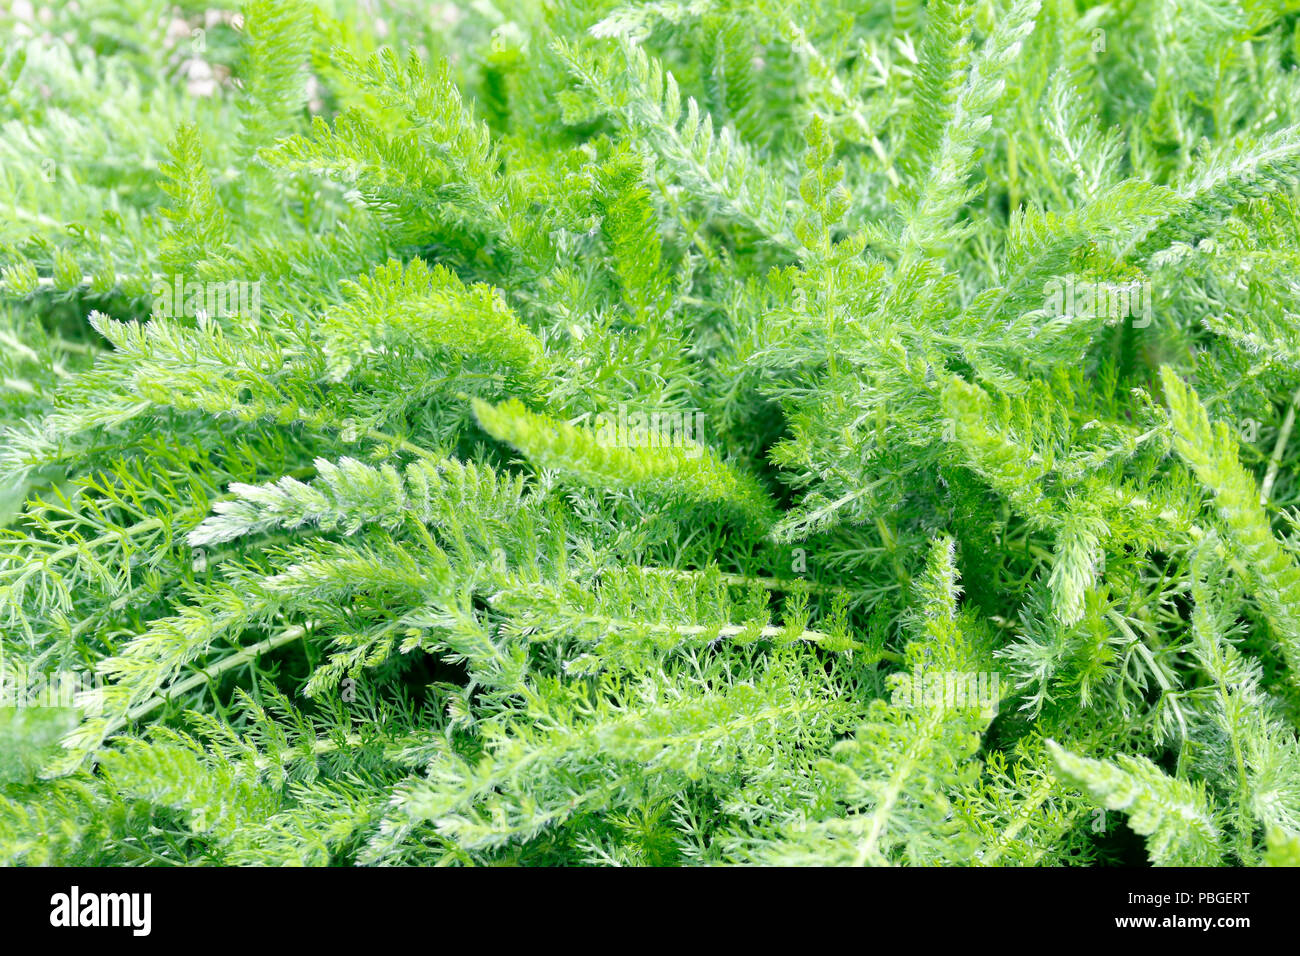 Foliage of Yarrow (Achillea Millefolium), a medicinal herb traditionally used for its anti-inflammatory properties Stock Photo